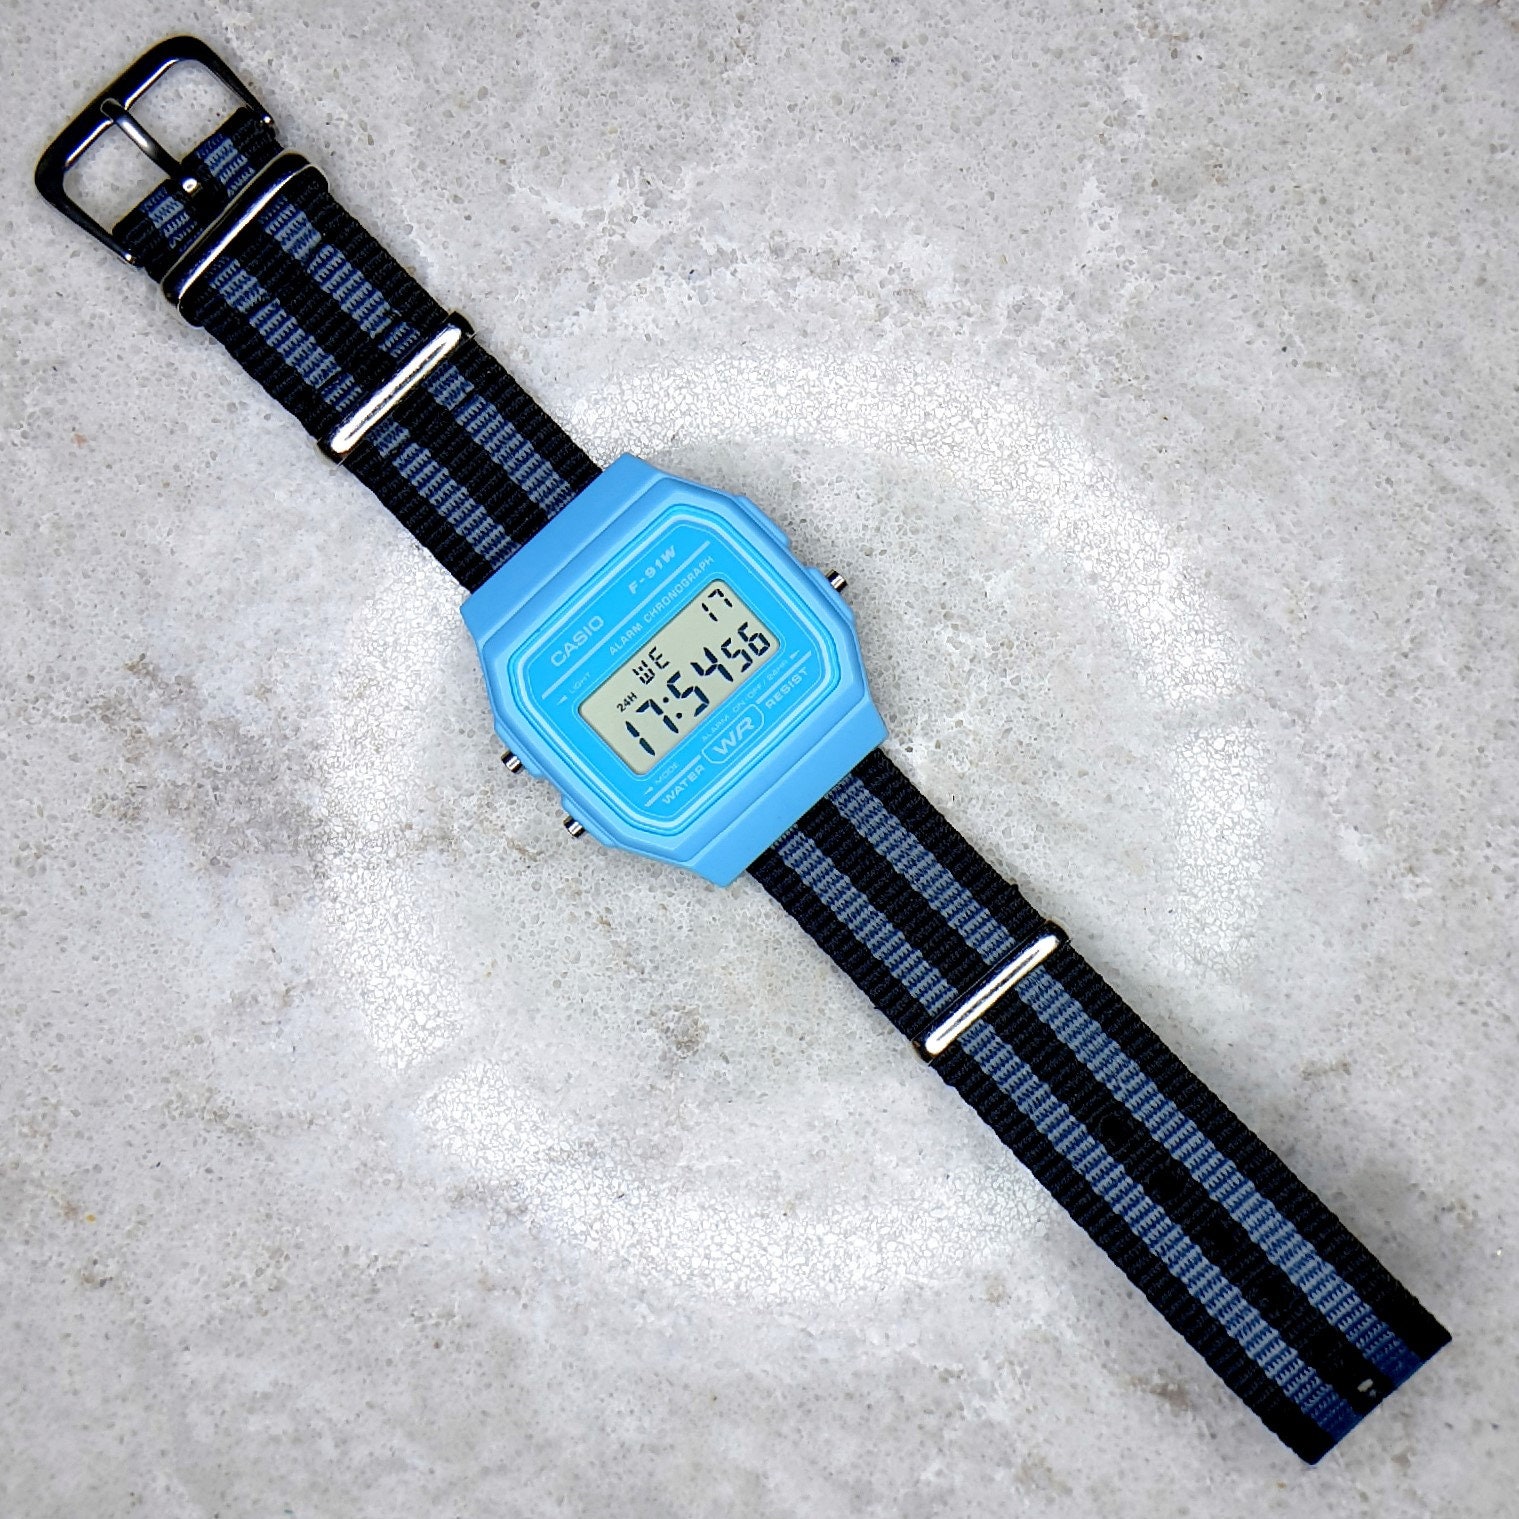 Reloj digital para niños correa de resina azul claro Casio